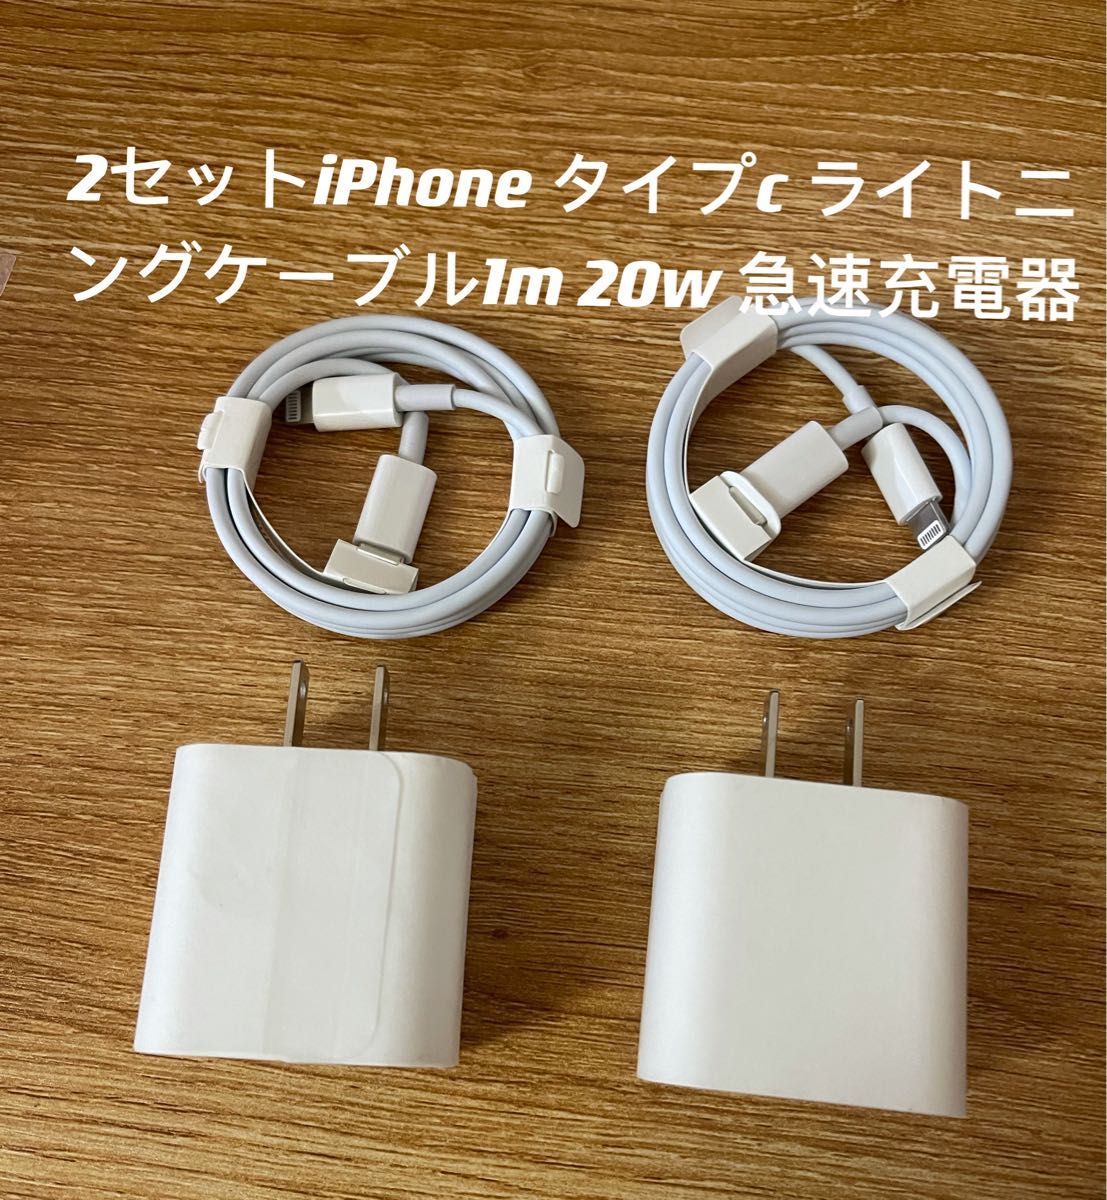 iPhoneタイプc ライトニングケーブル1m  20w 急速充電器  2セット